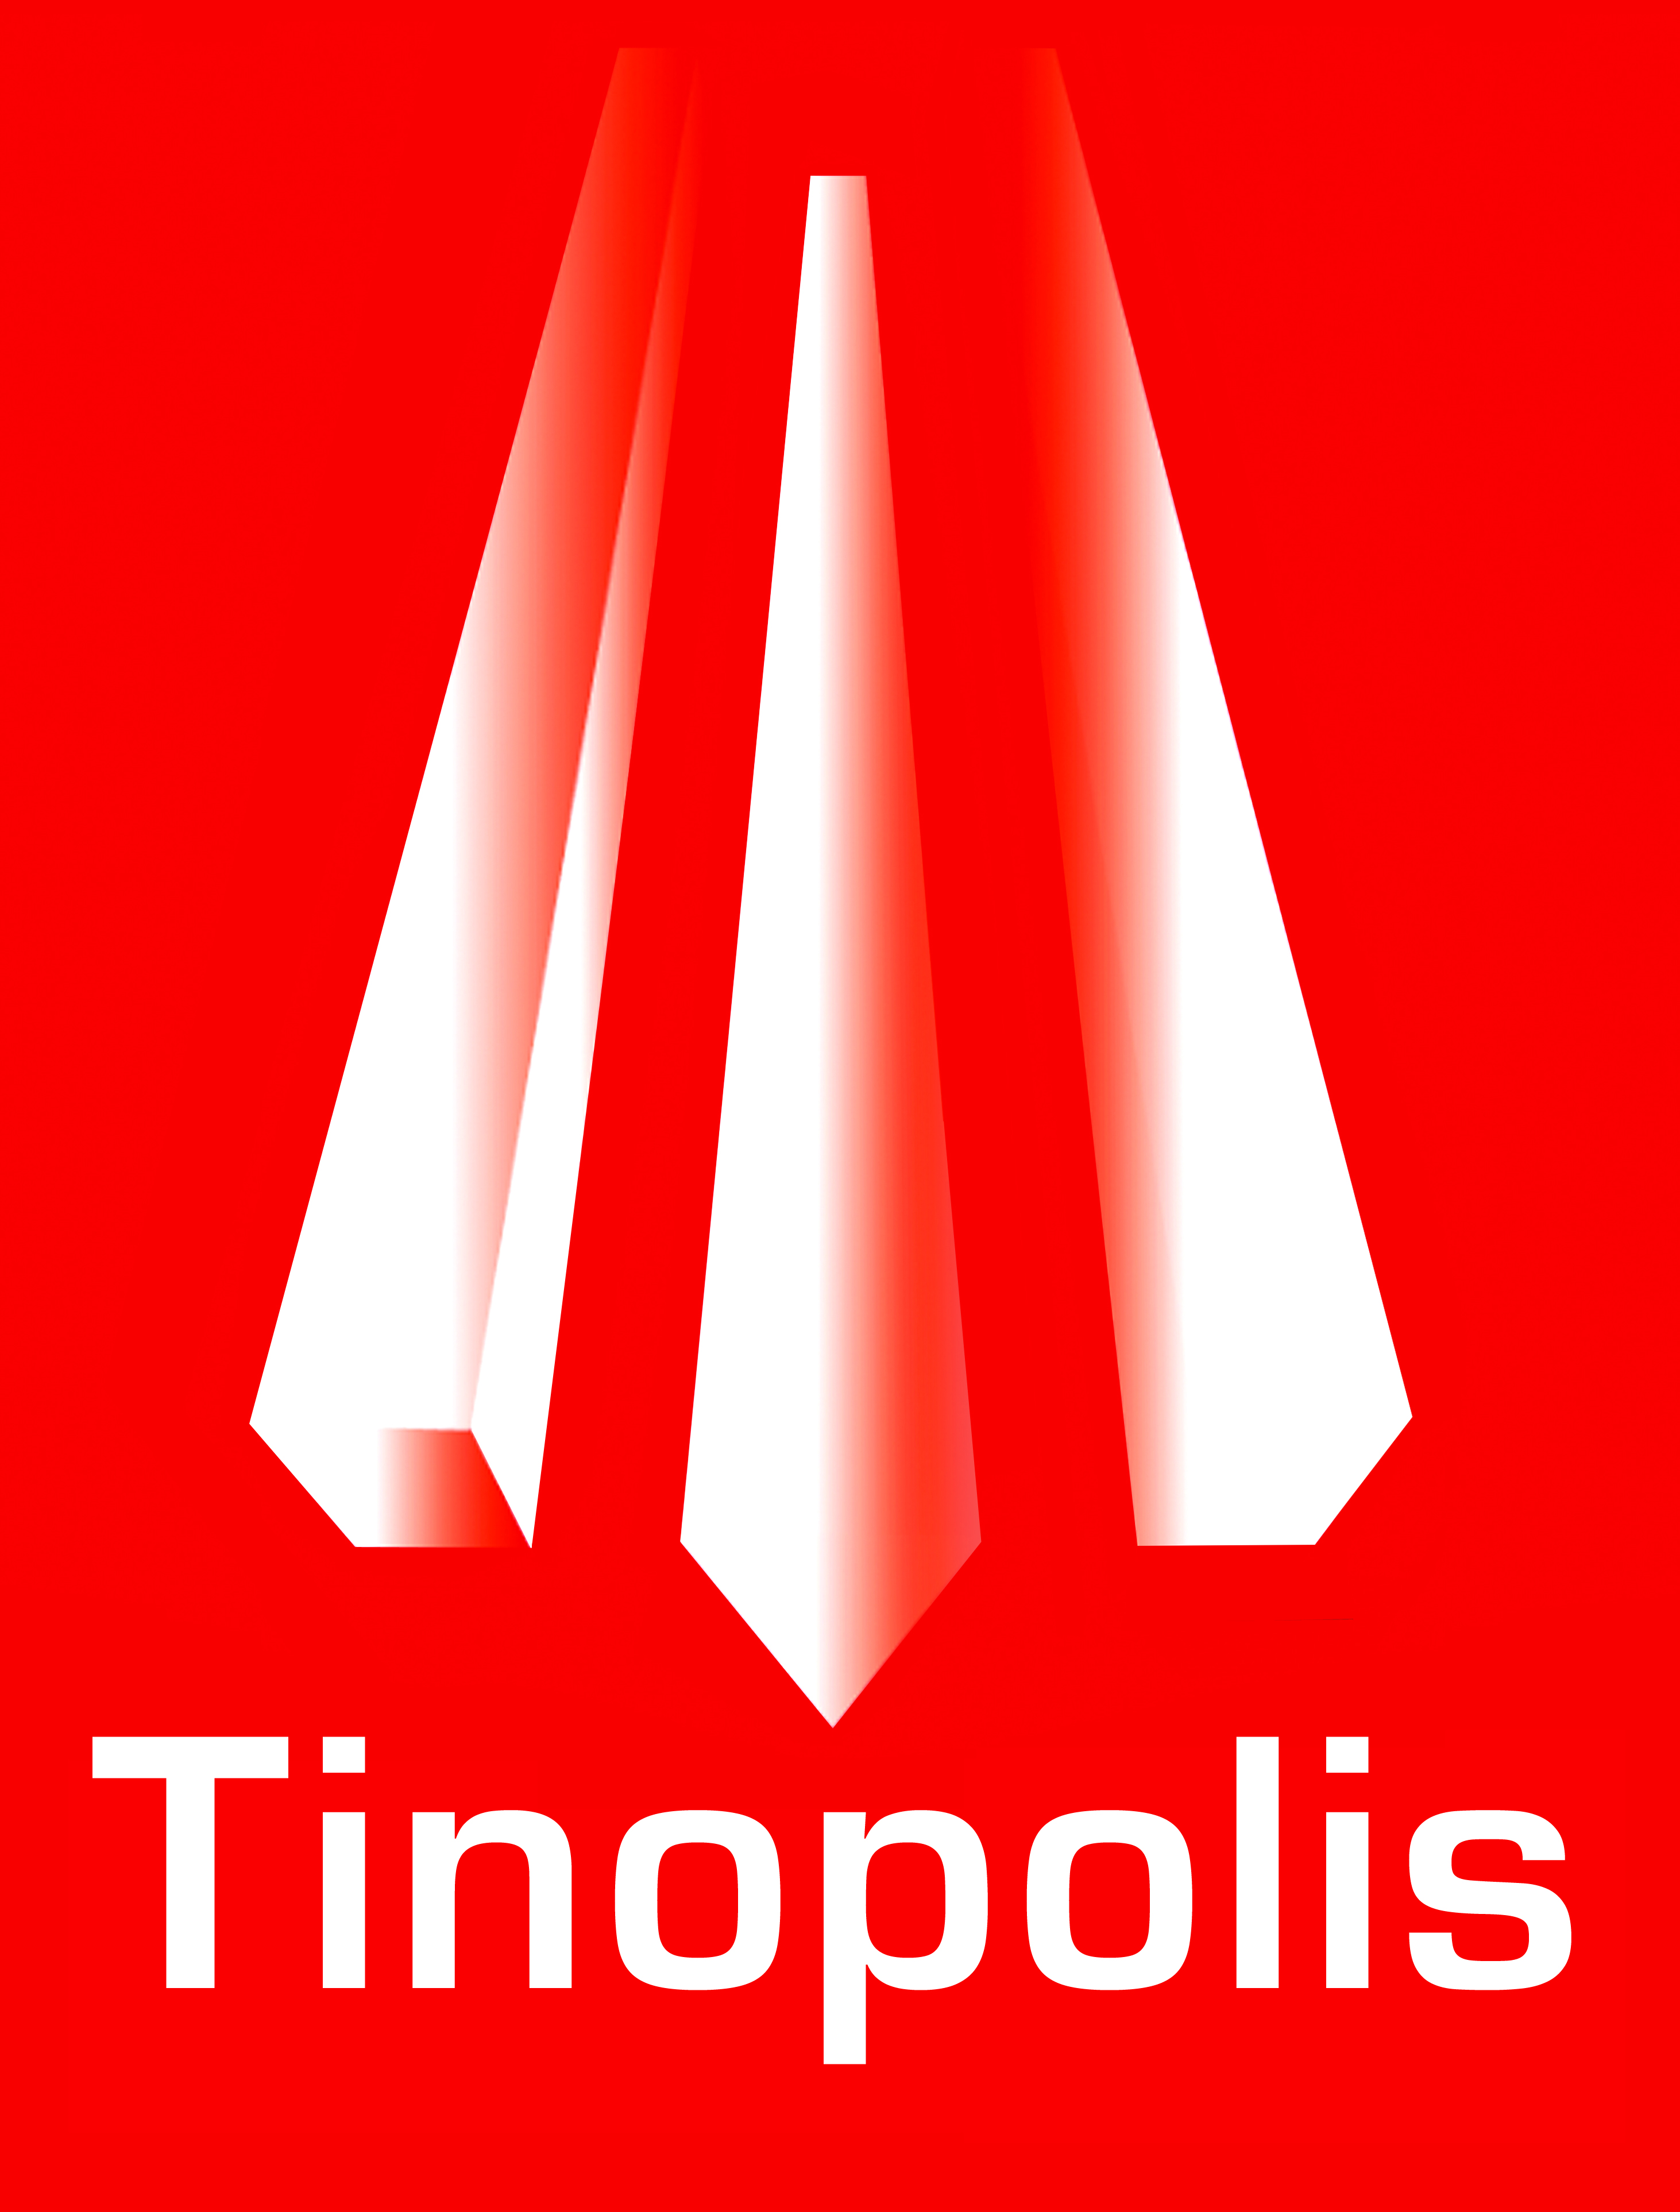 s:\frc shared\shared\clients o-z\tinopolis\images\tinopolis logo large.jpg